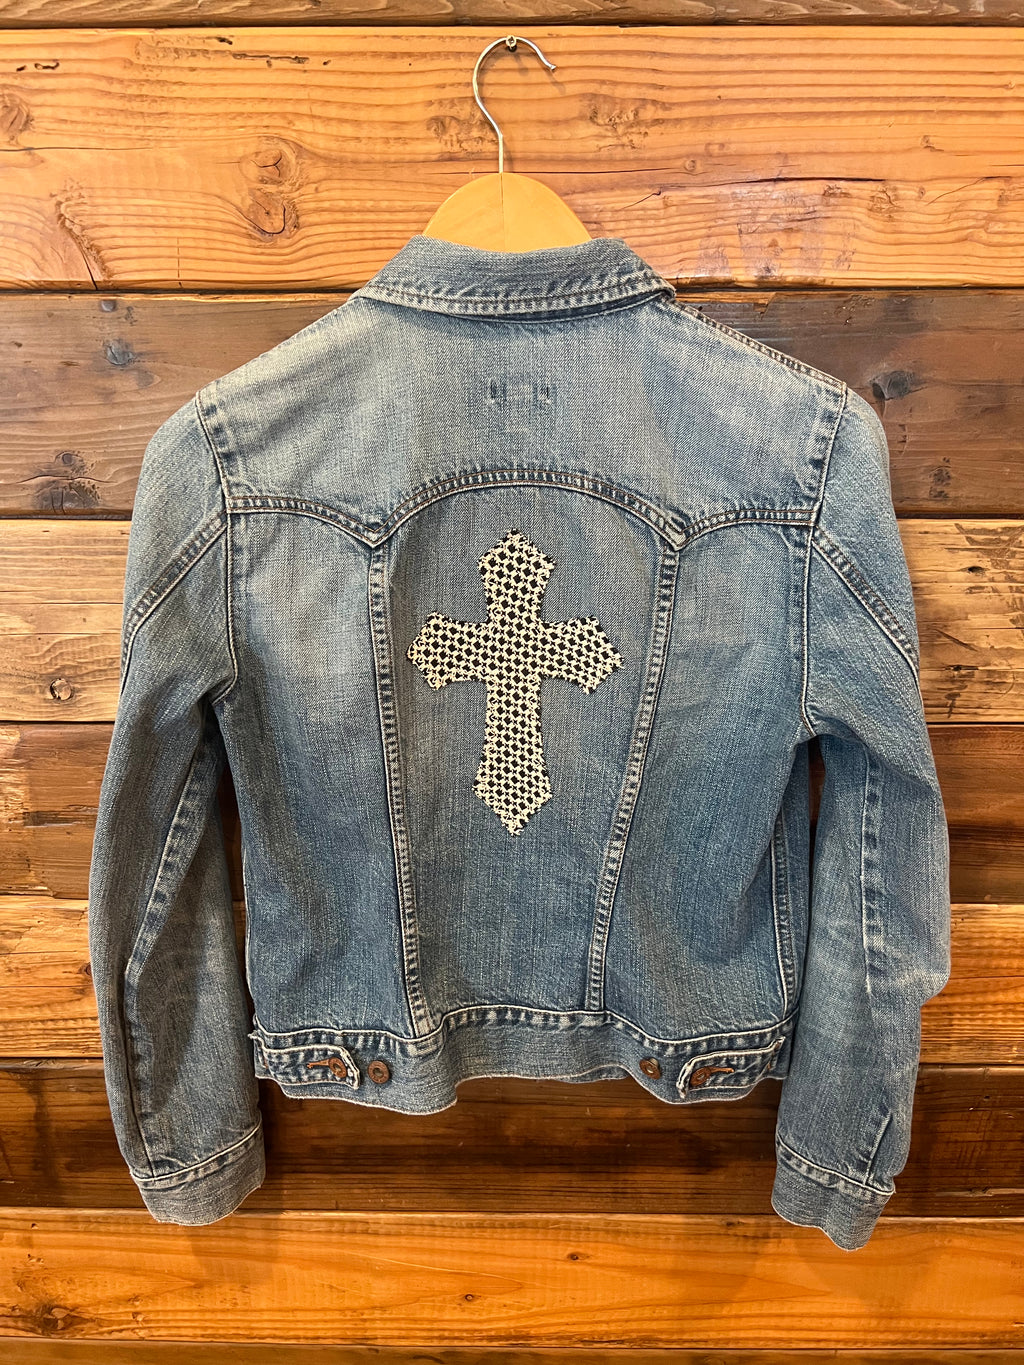 Gap vintage jean jacket custom one of a kind cross